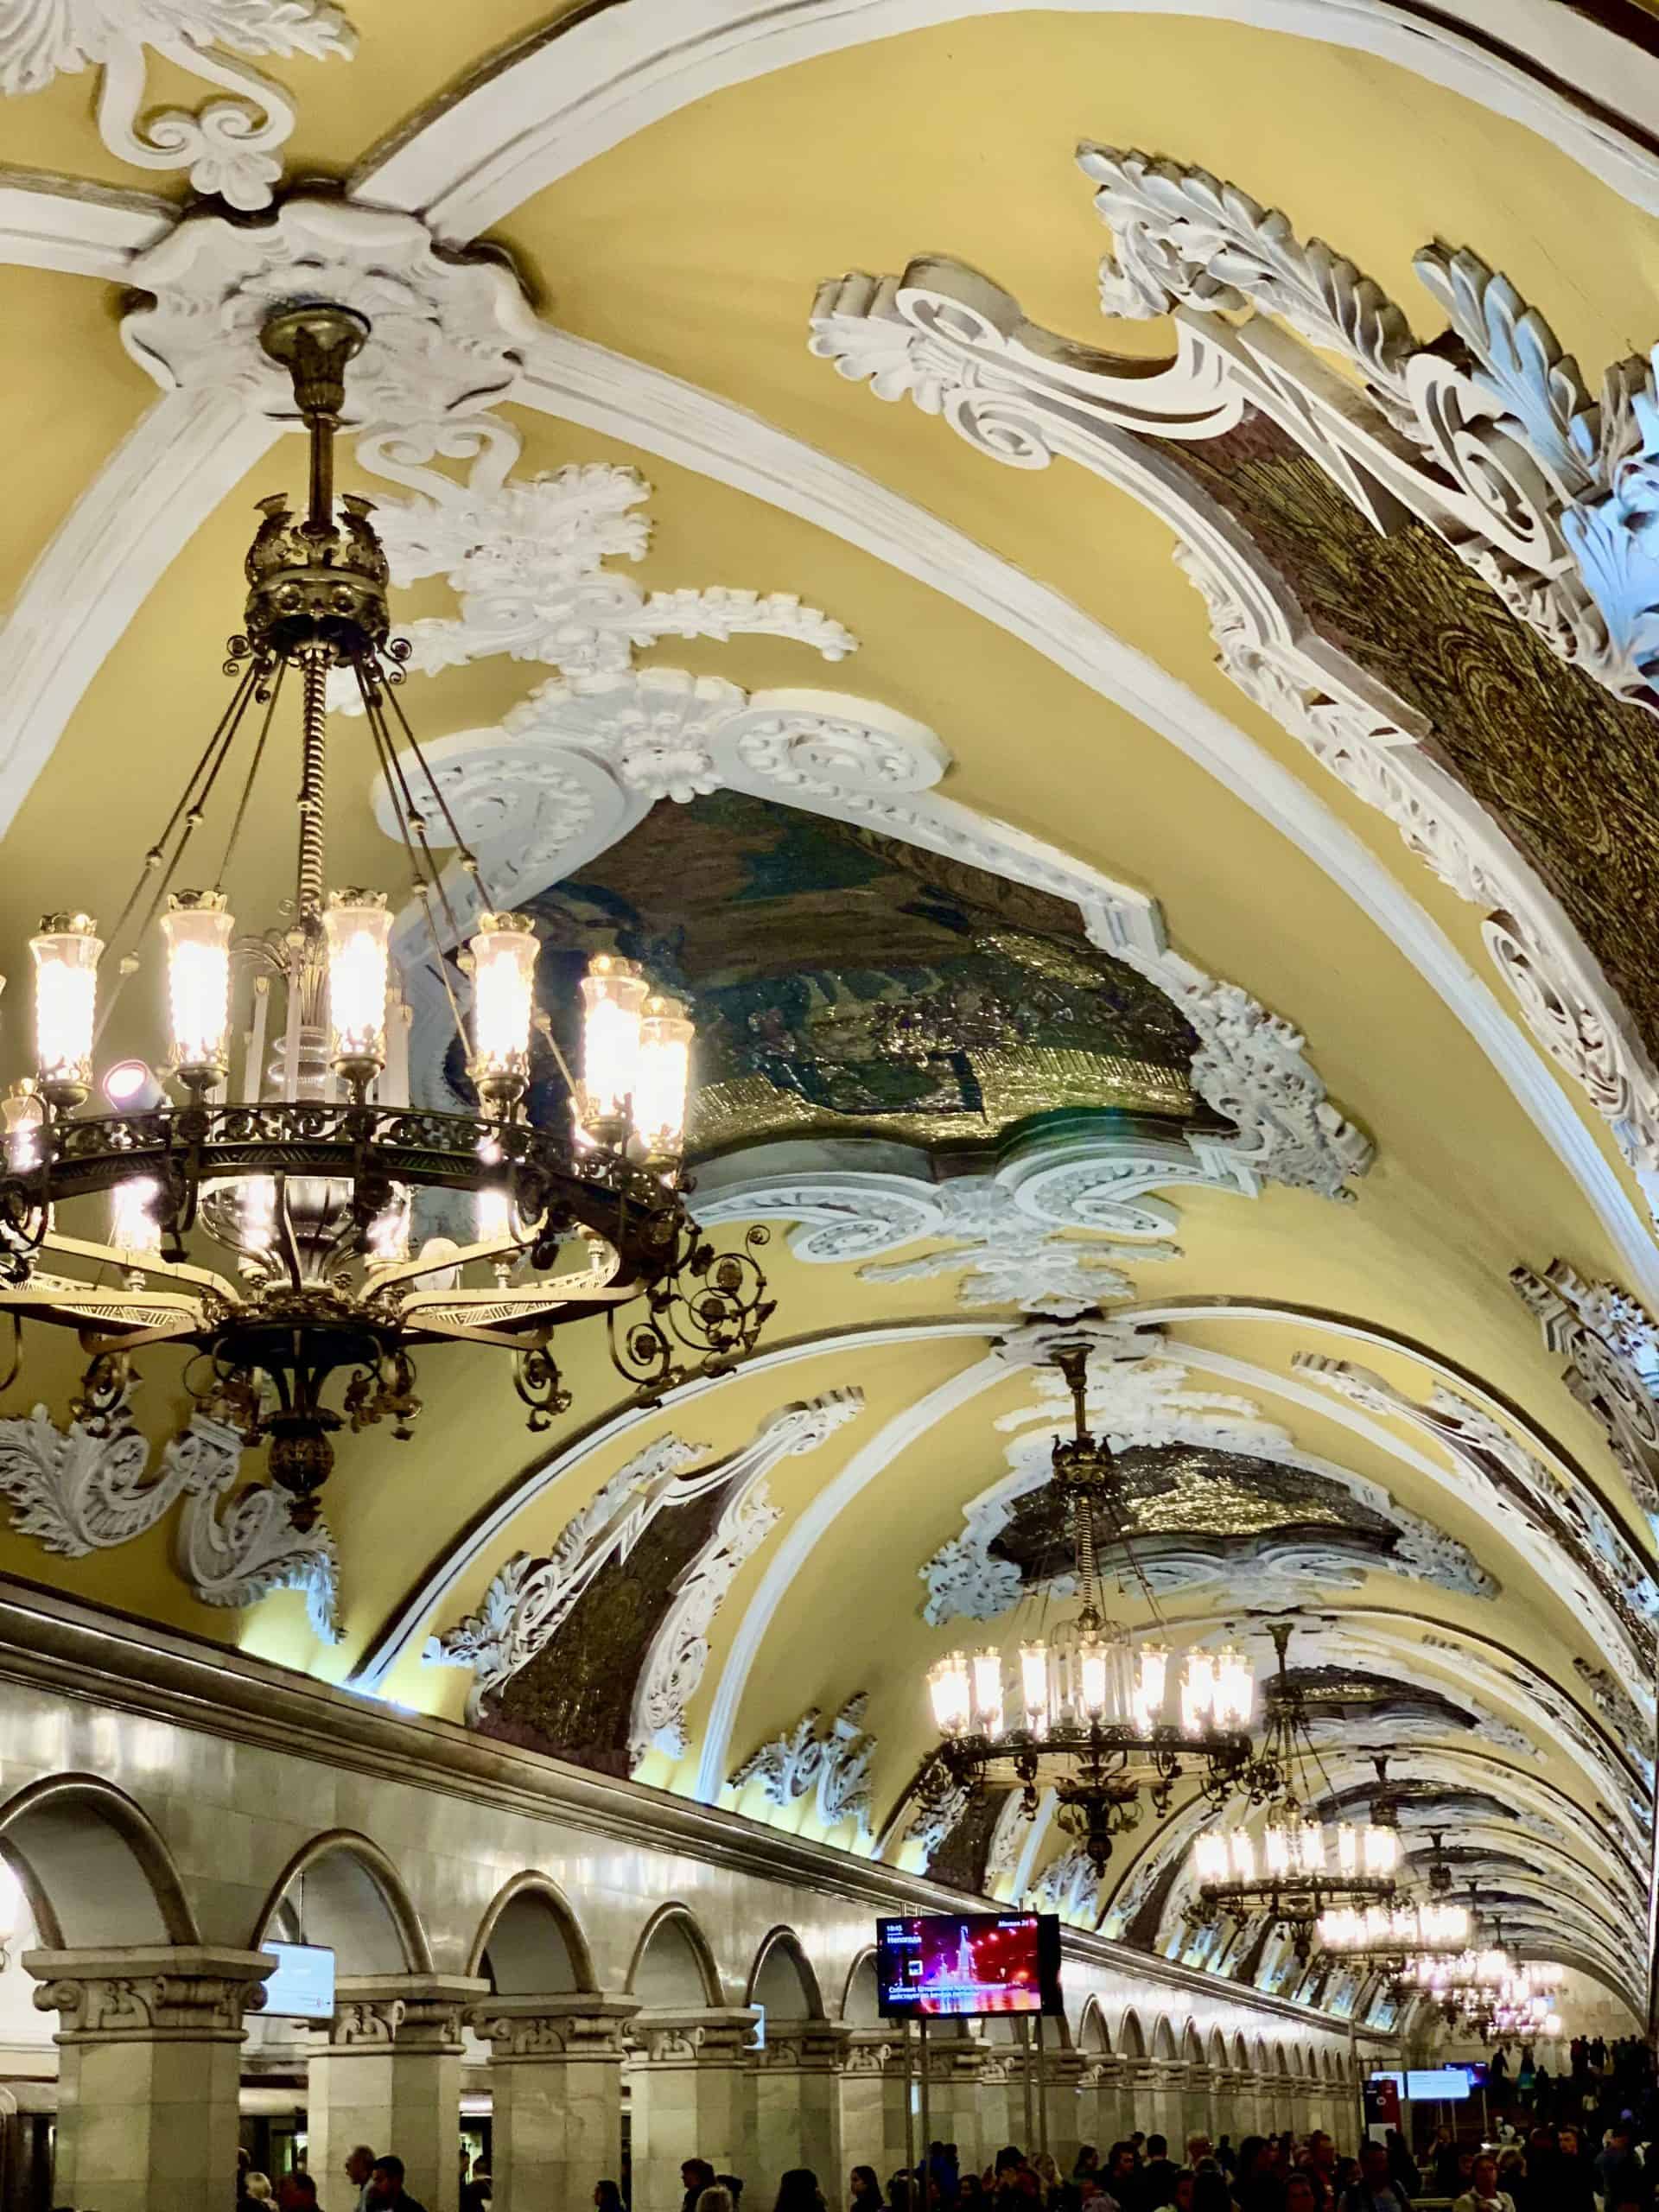 komsomolskaya station with chandeliers